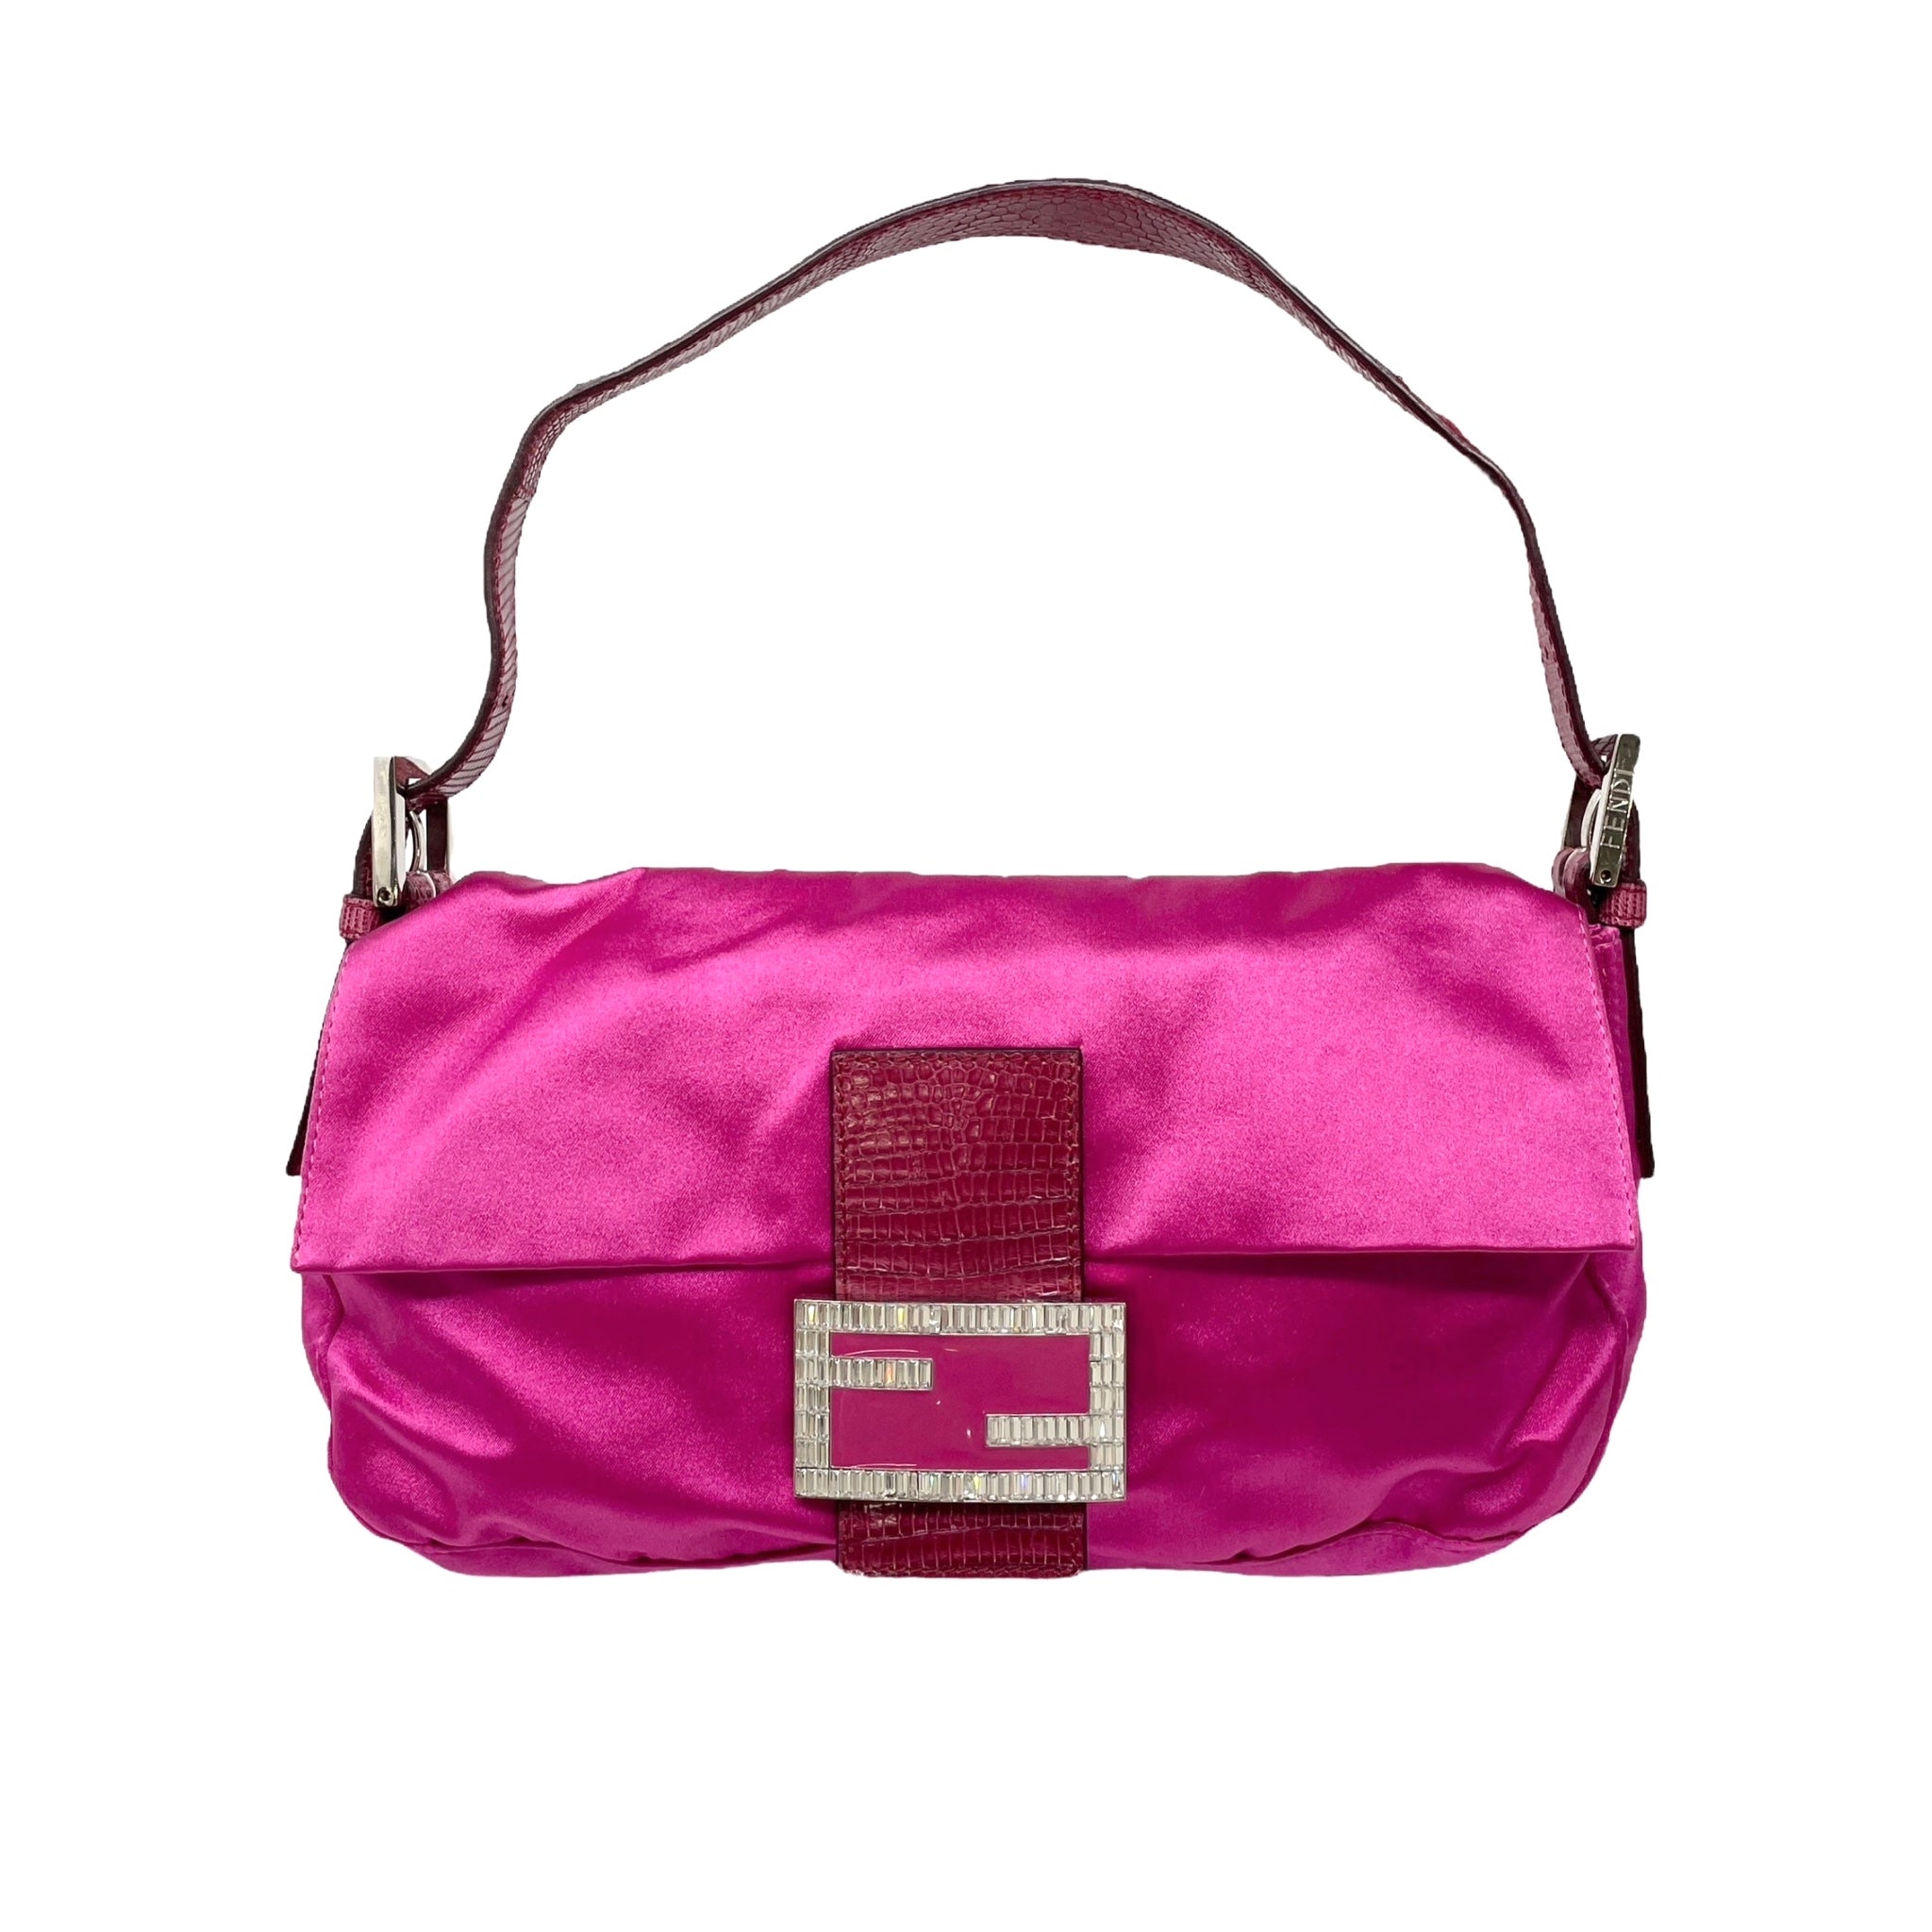 Baguette Phone Pouch - Pink silk pouch